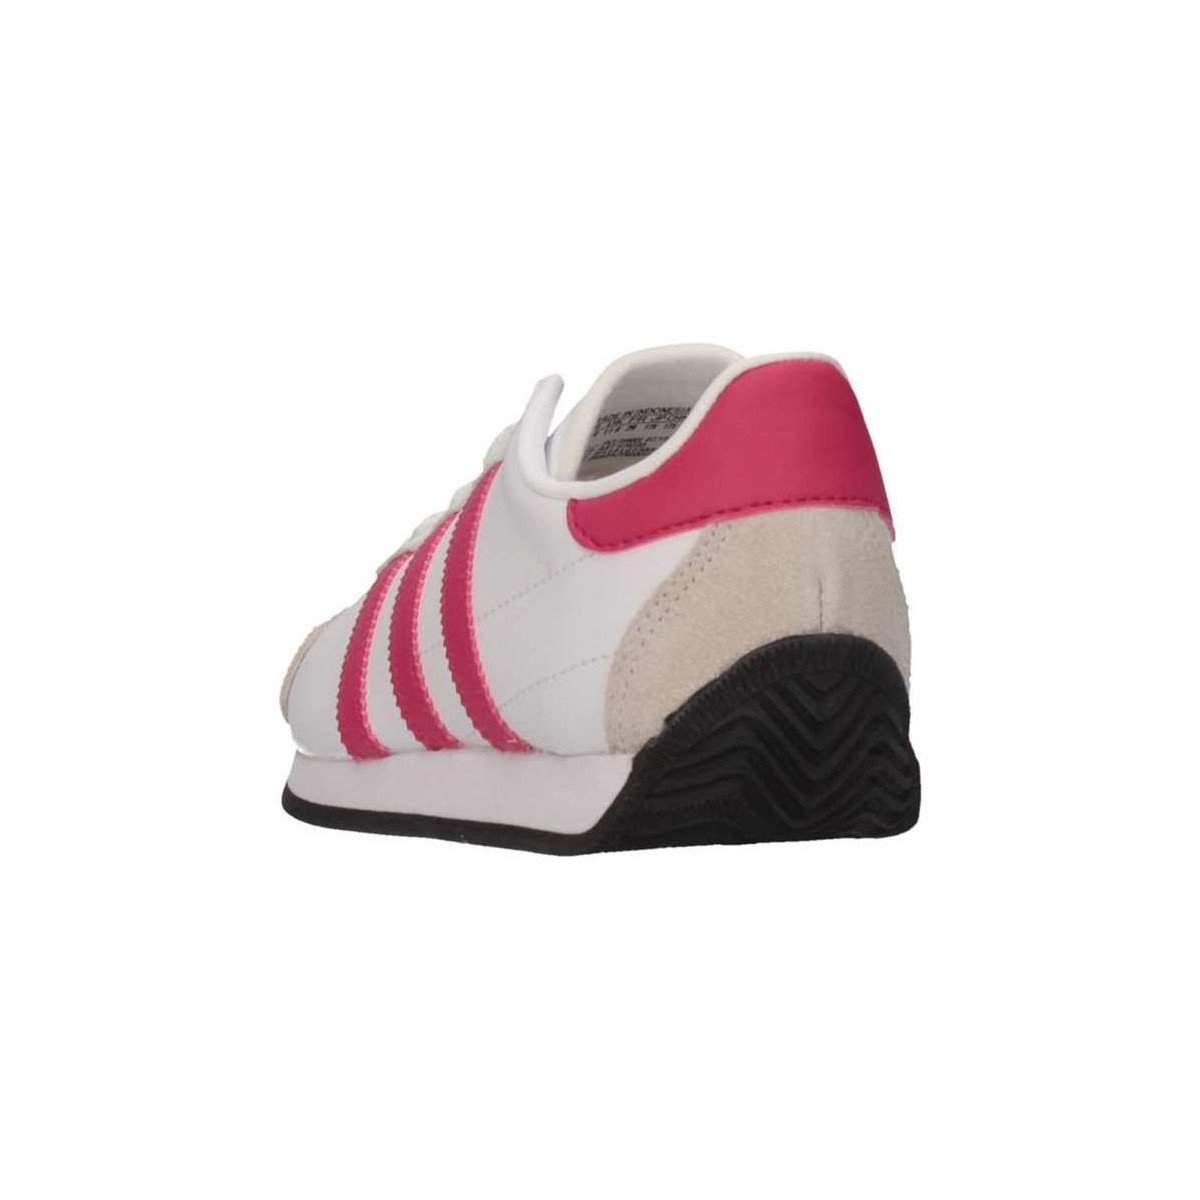 adidas Originals Multicolore ADIS76233 Basket Enfant Blanc / Rose yMMFen1A